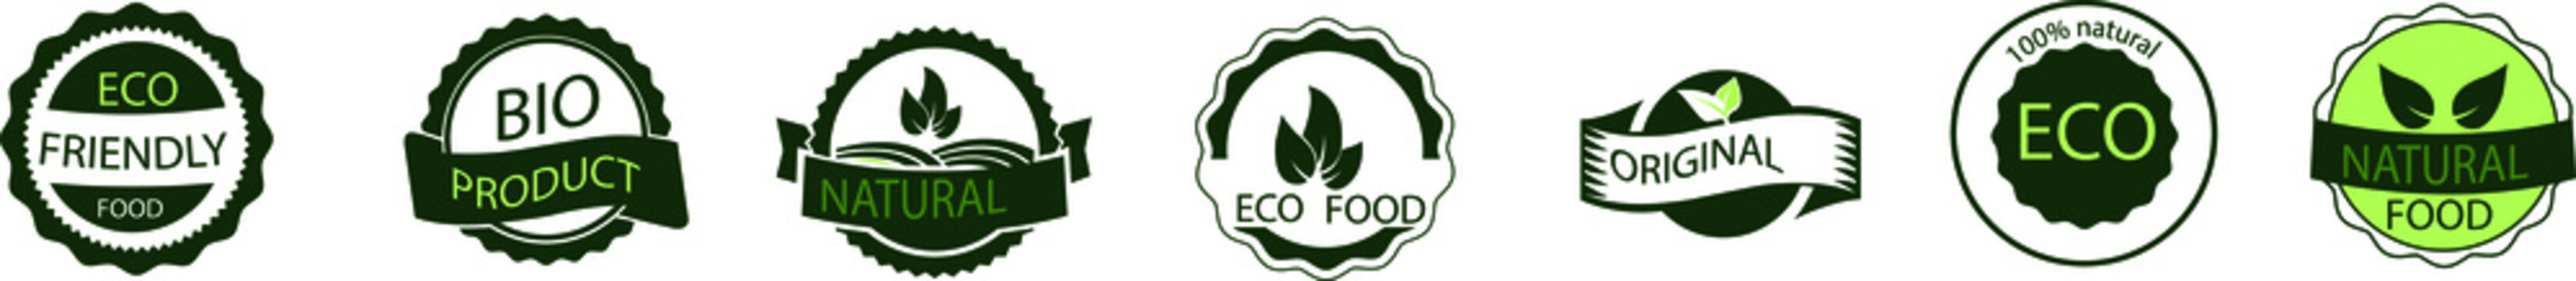 Organic natural bio labels set icon, healthy foods badges, fresh eco vegetarian food – stock vector
